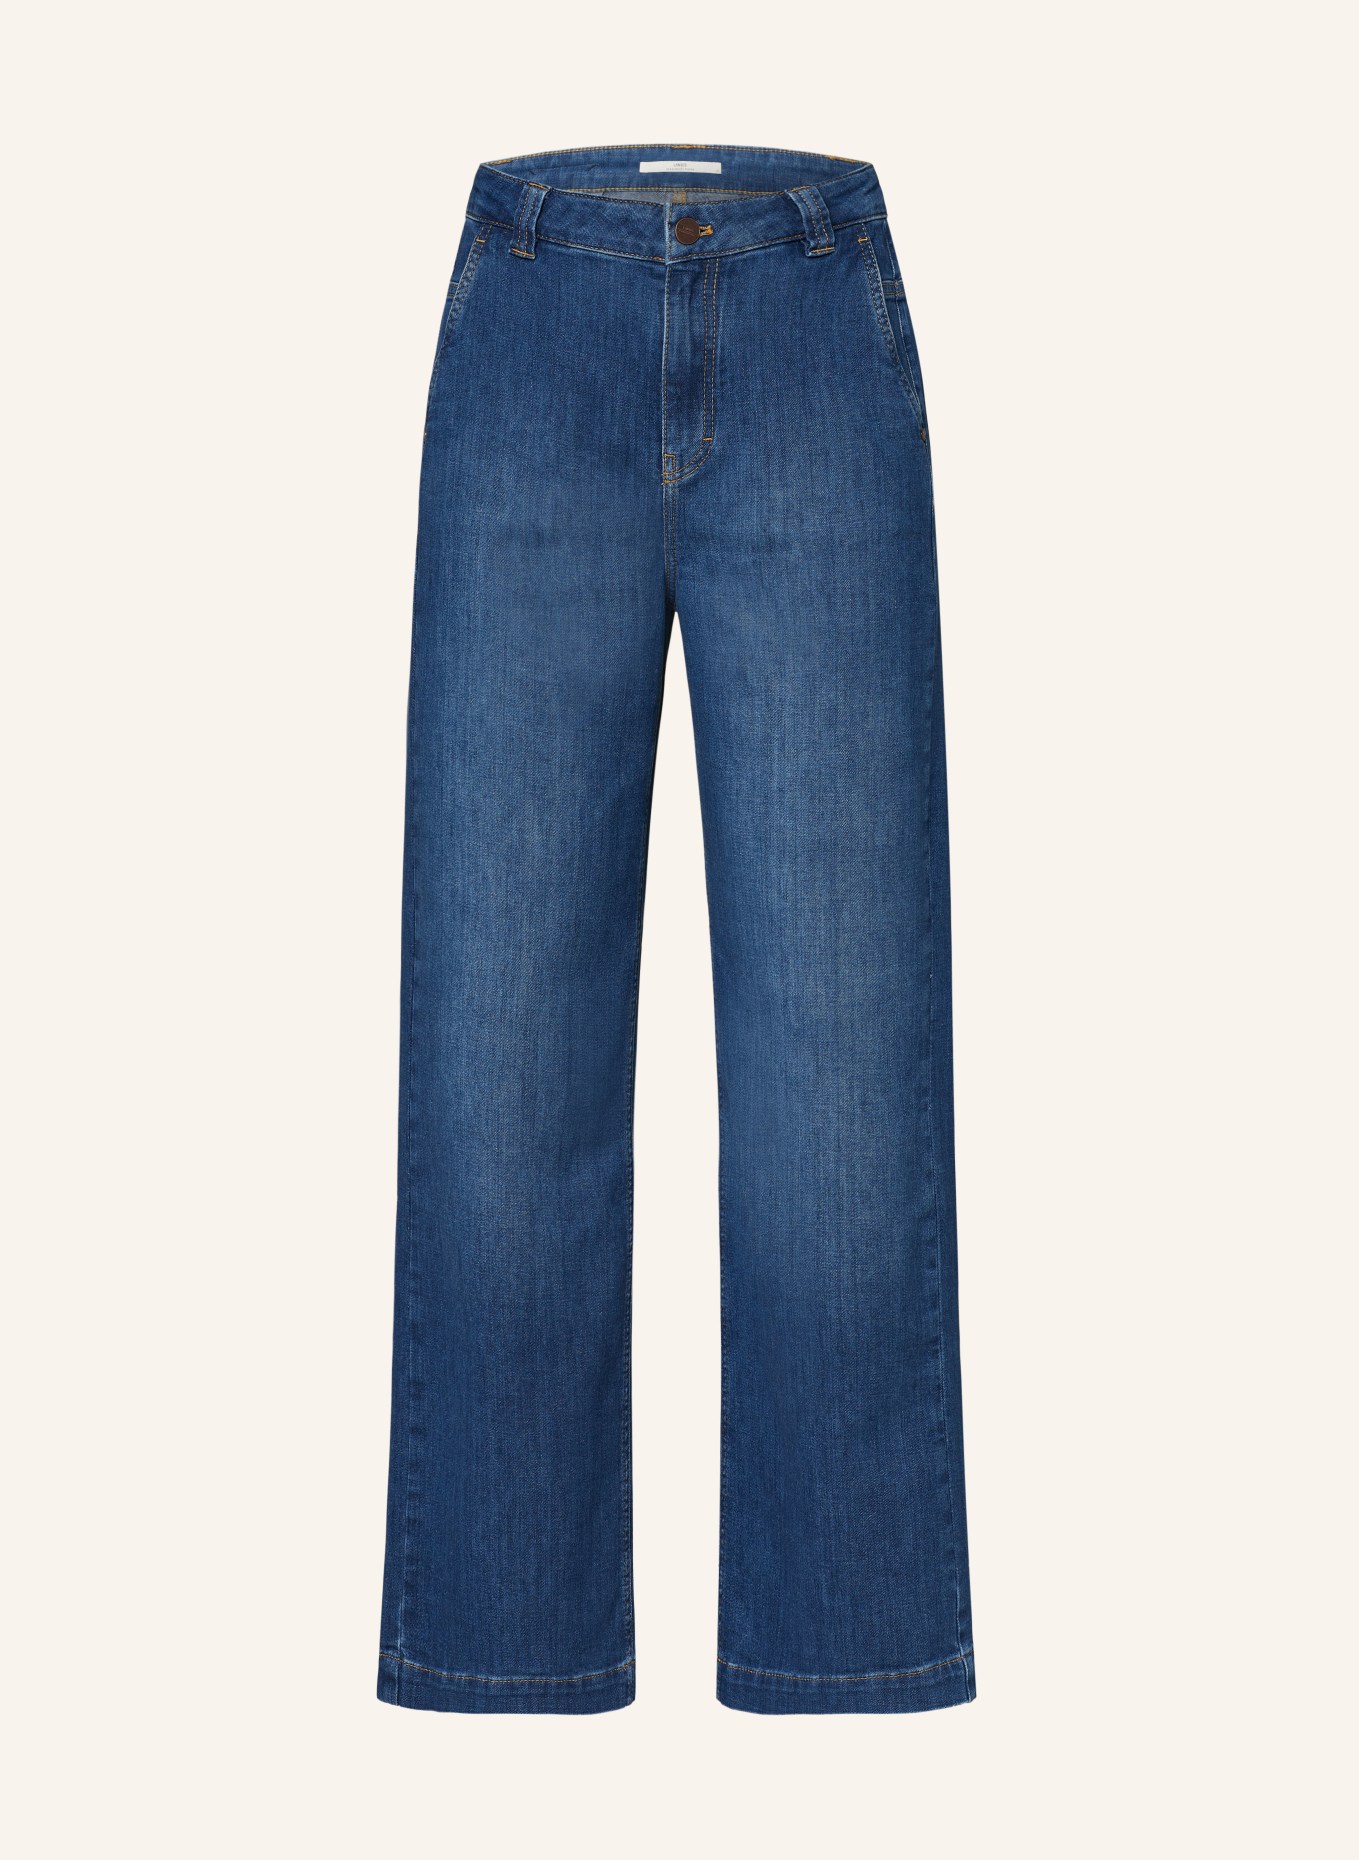 LANIUS Flared Jeans, Farbe: 577 mid blue denim (Bild 1)